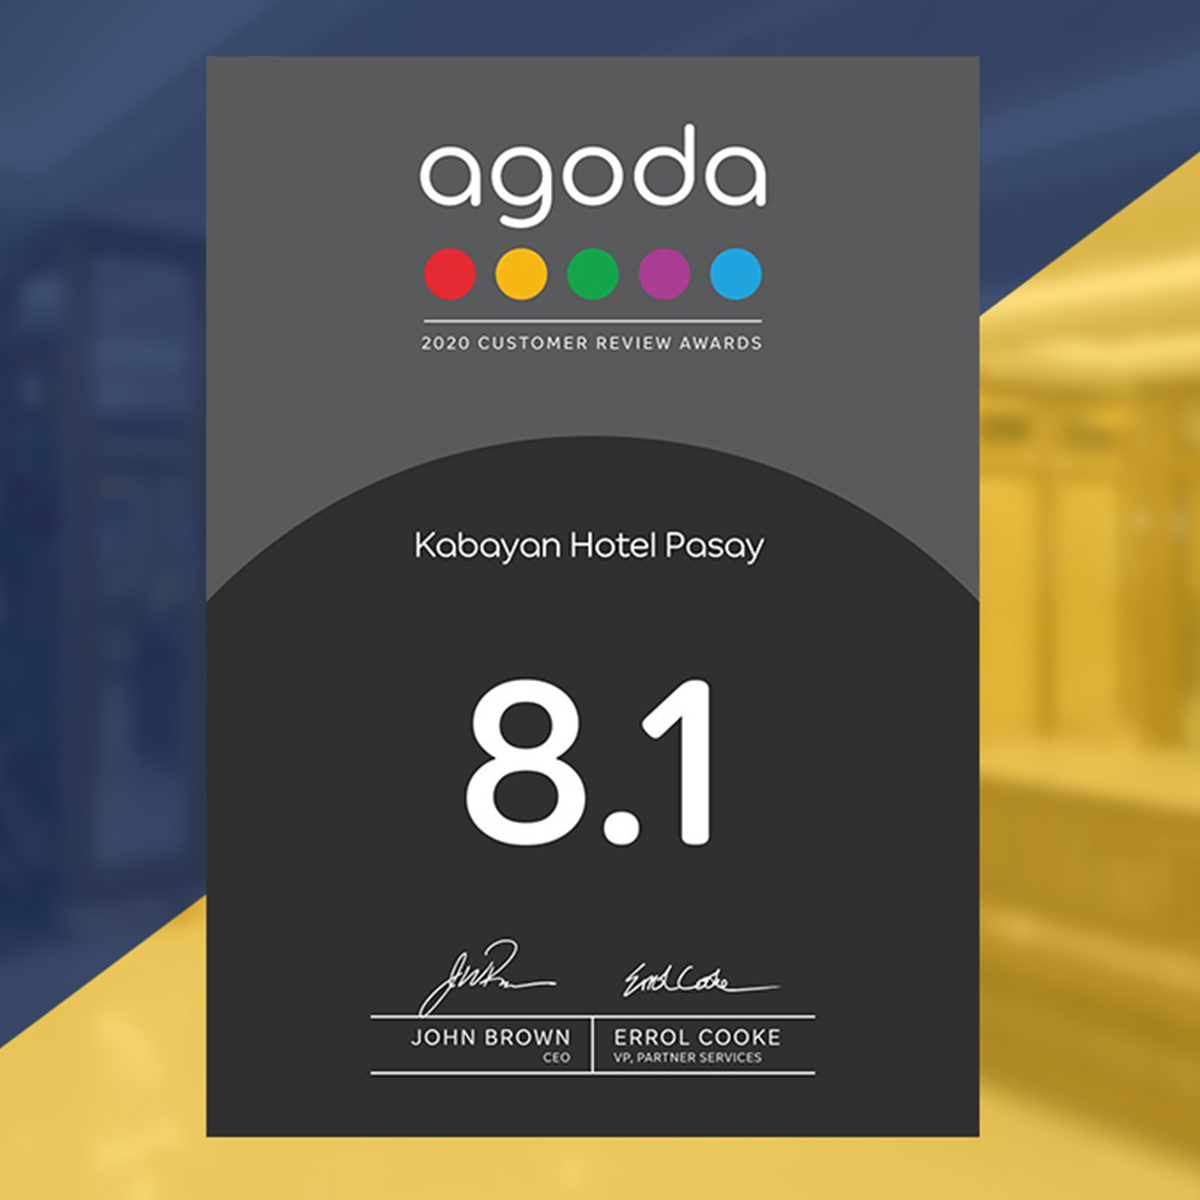 Kabayan Hotel Agoda 2020 Customer Review Awards